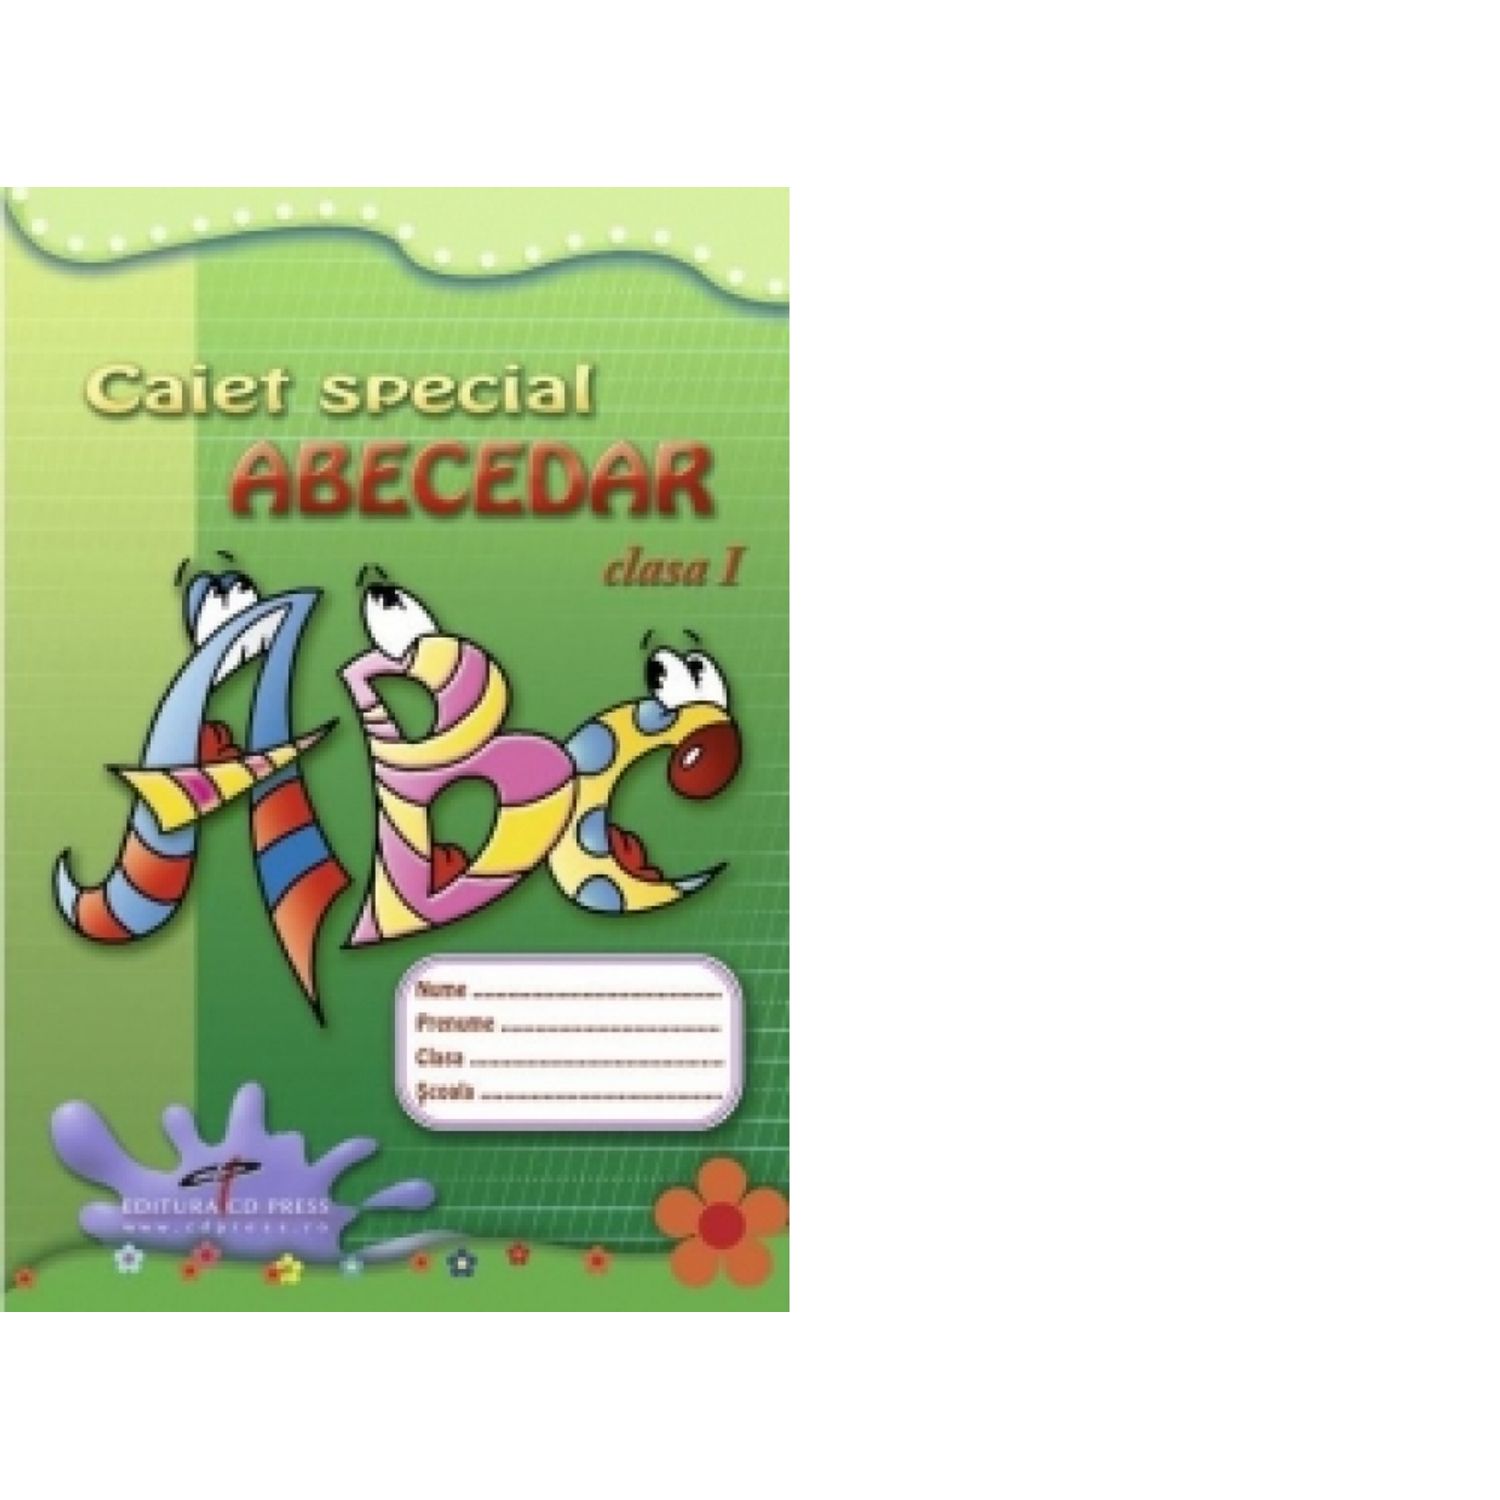 Caiet special abecedar - clasa I